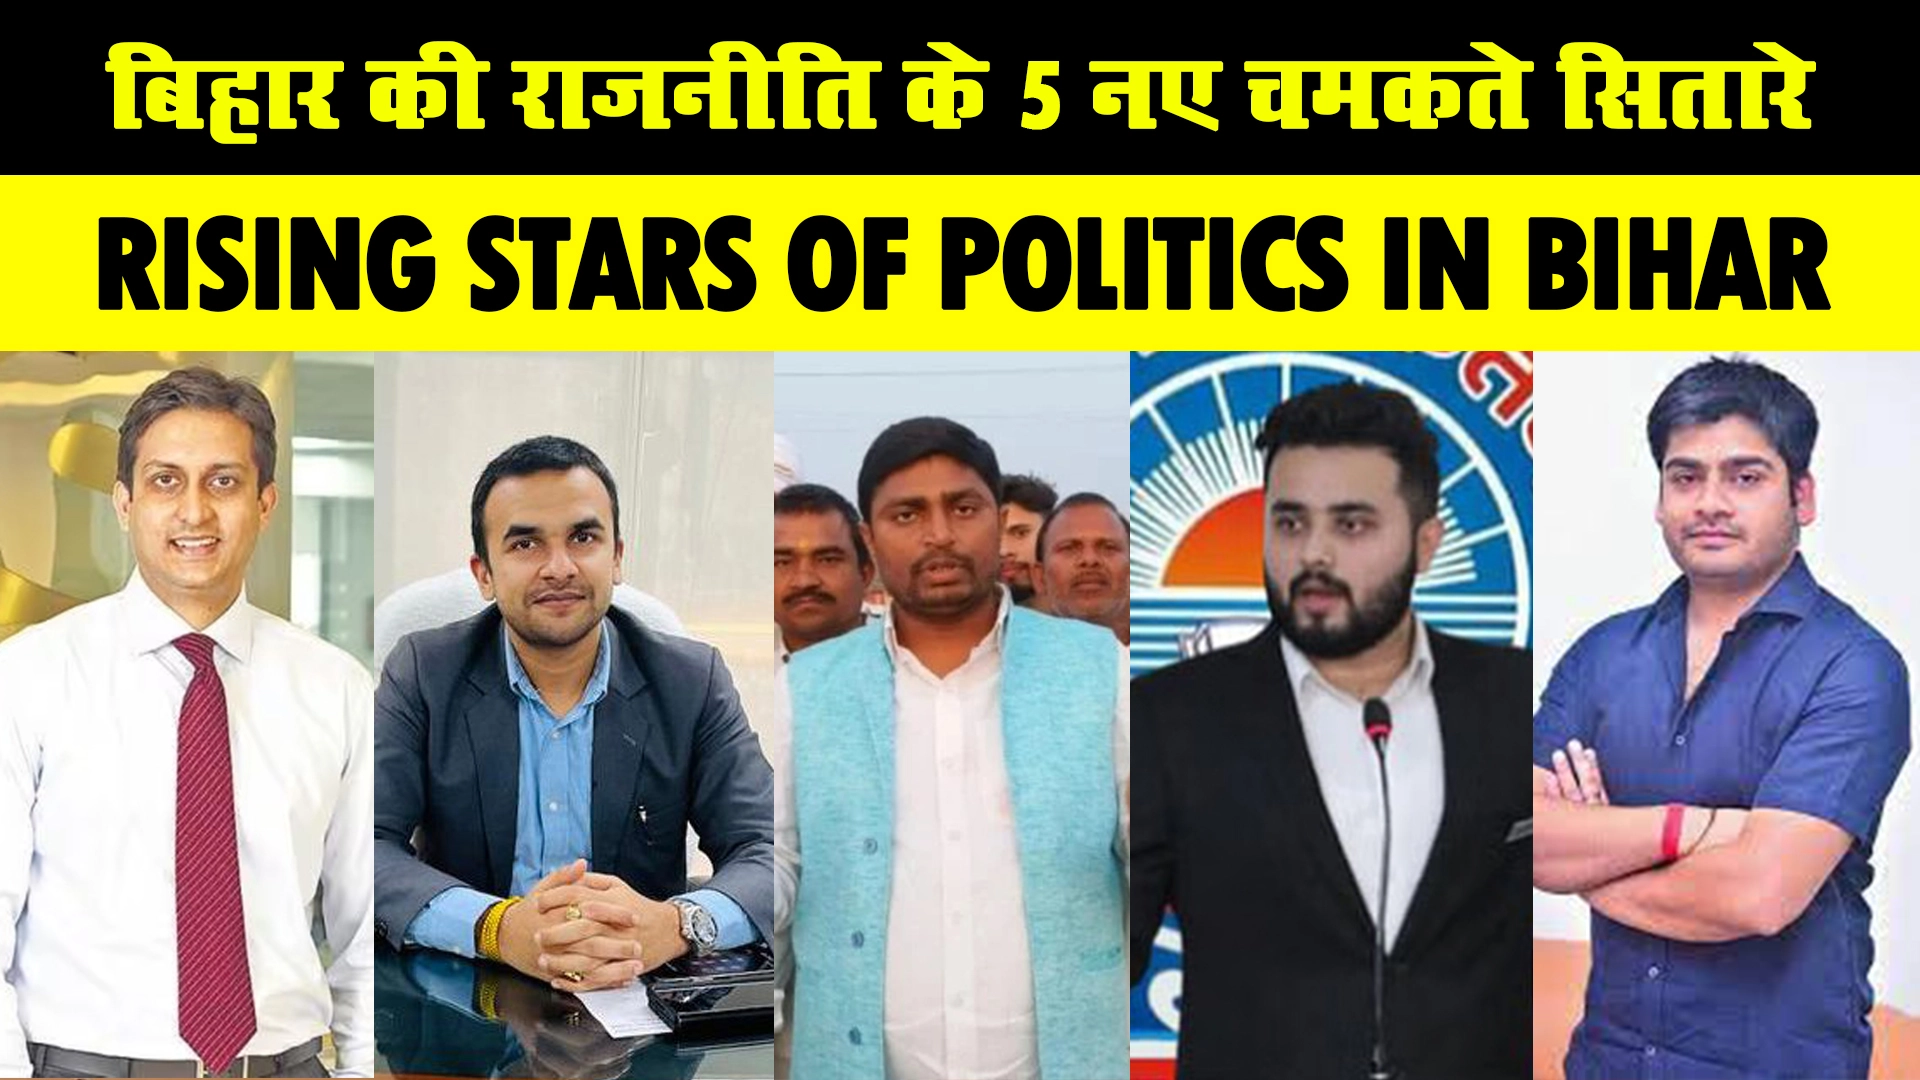 Top 5 Rising Stars of Politics in Bihar